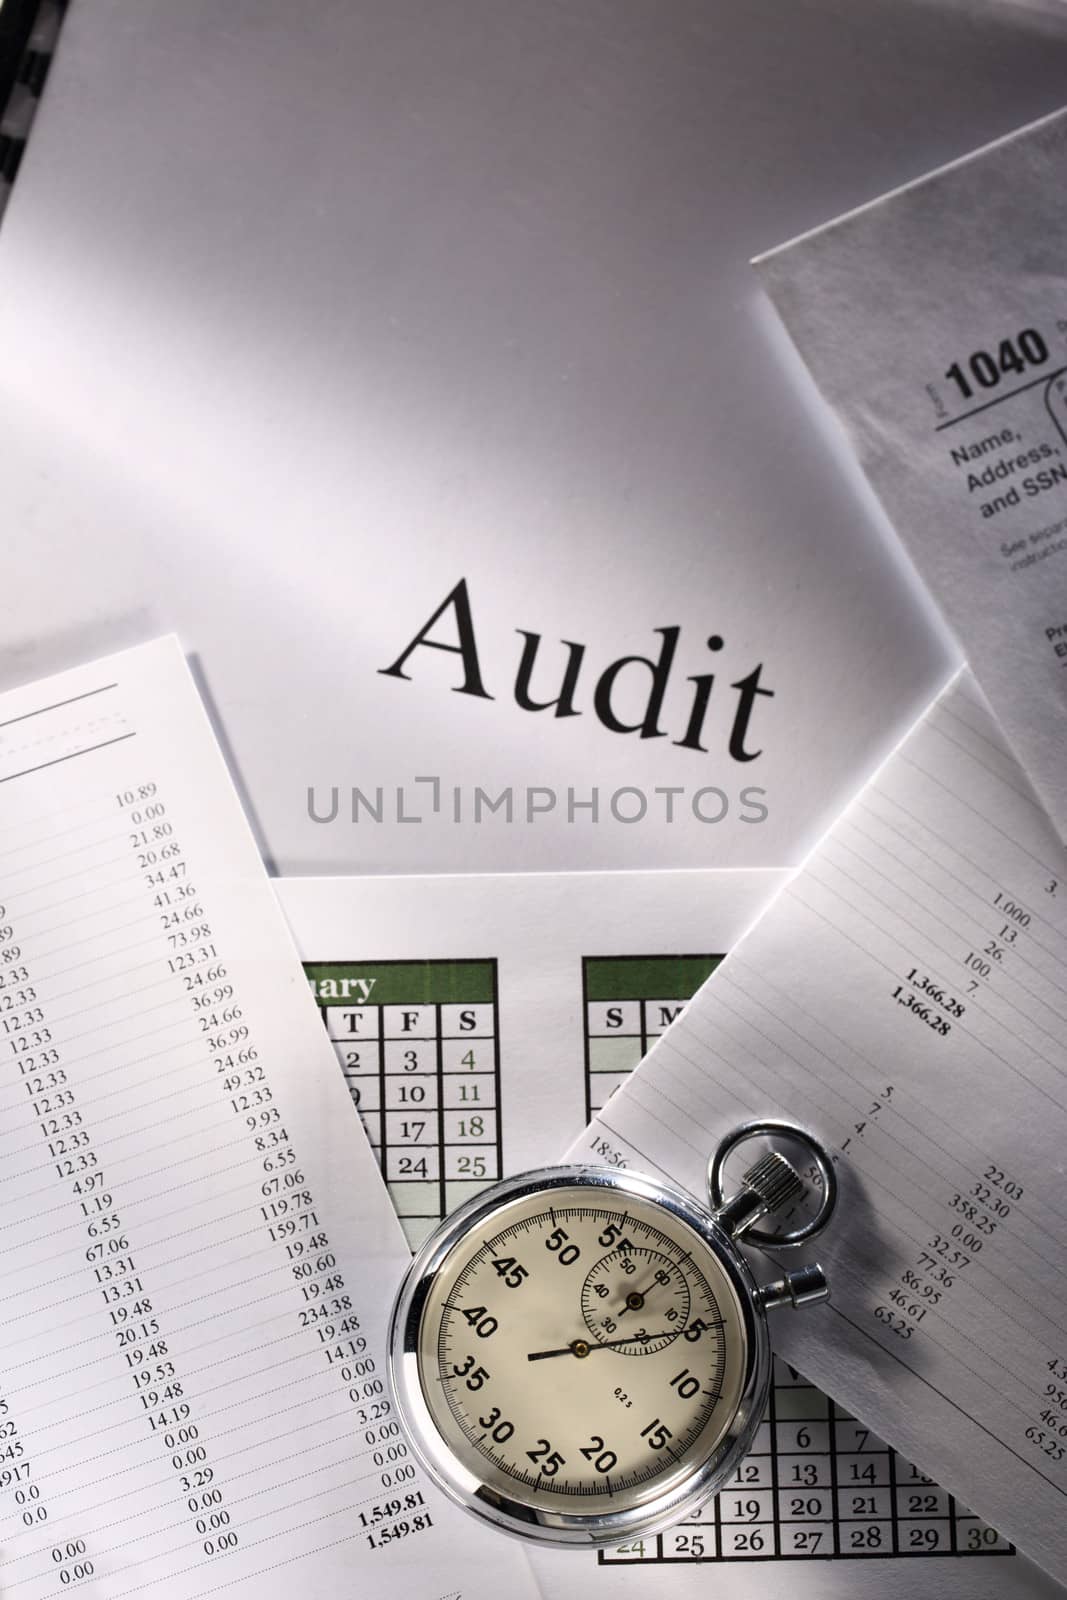 Operating budget, calendar, stopwatch and audit